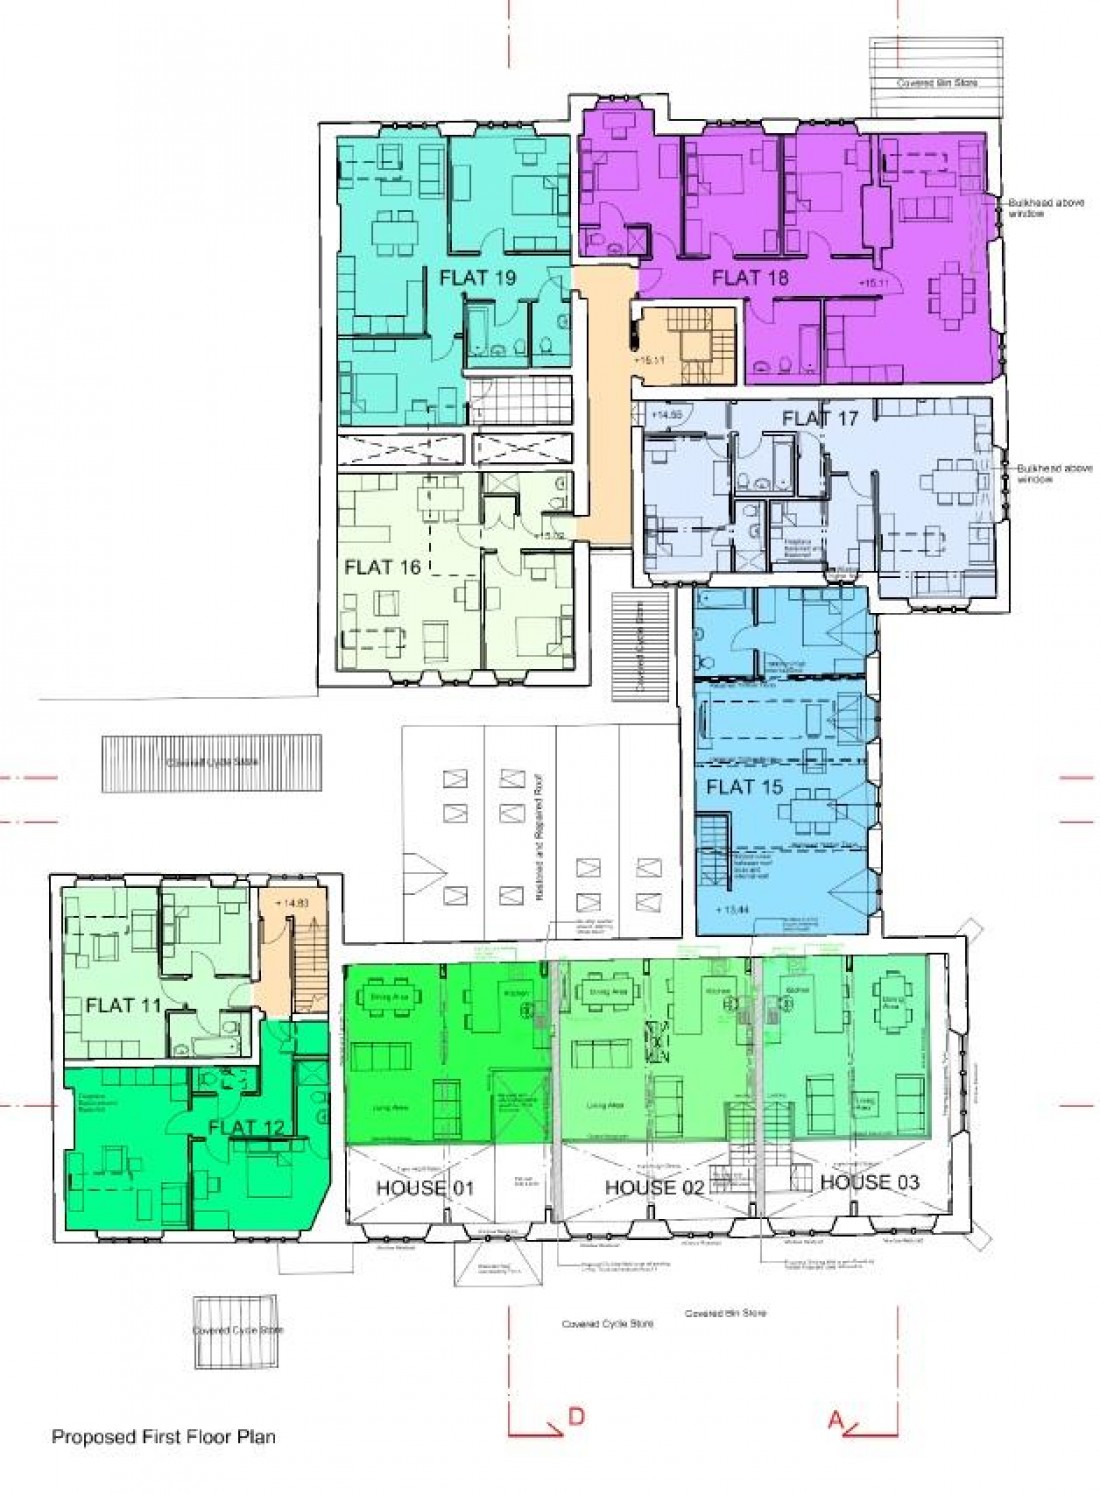 Floorplan for ST AGNES - PP GRANTED 23 RESI UNITS